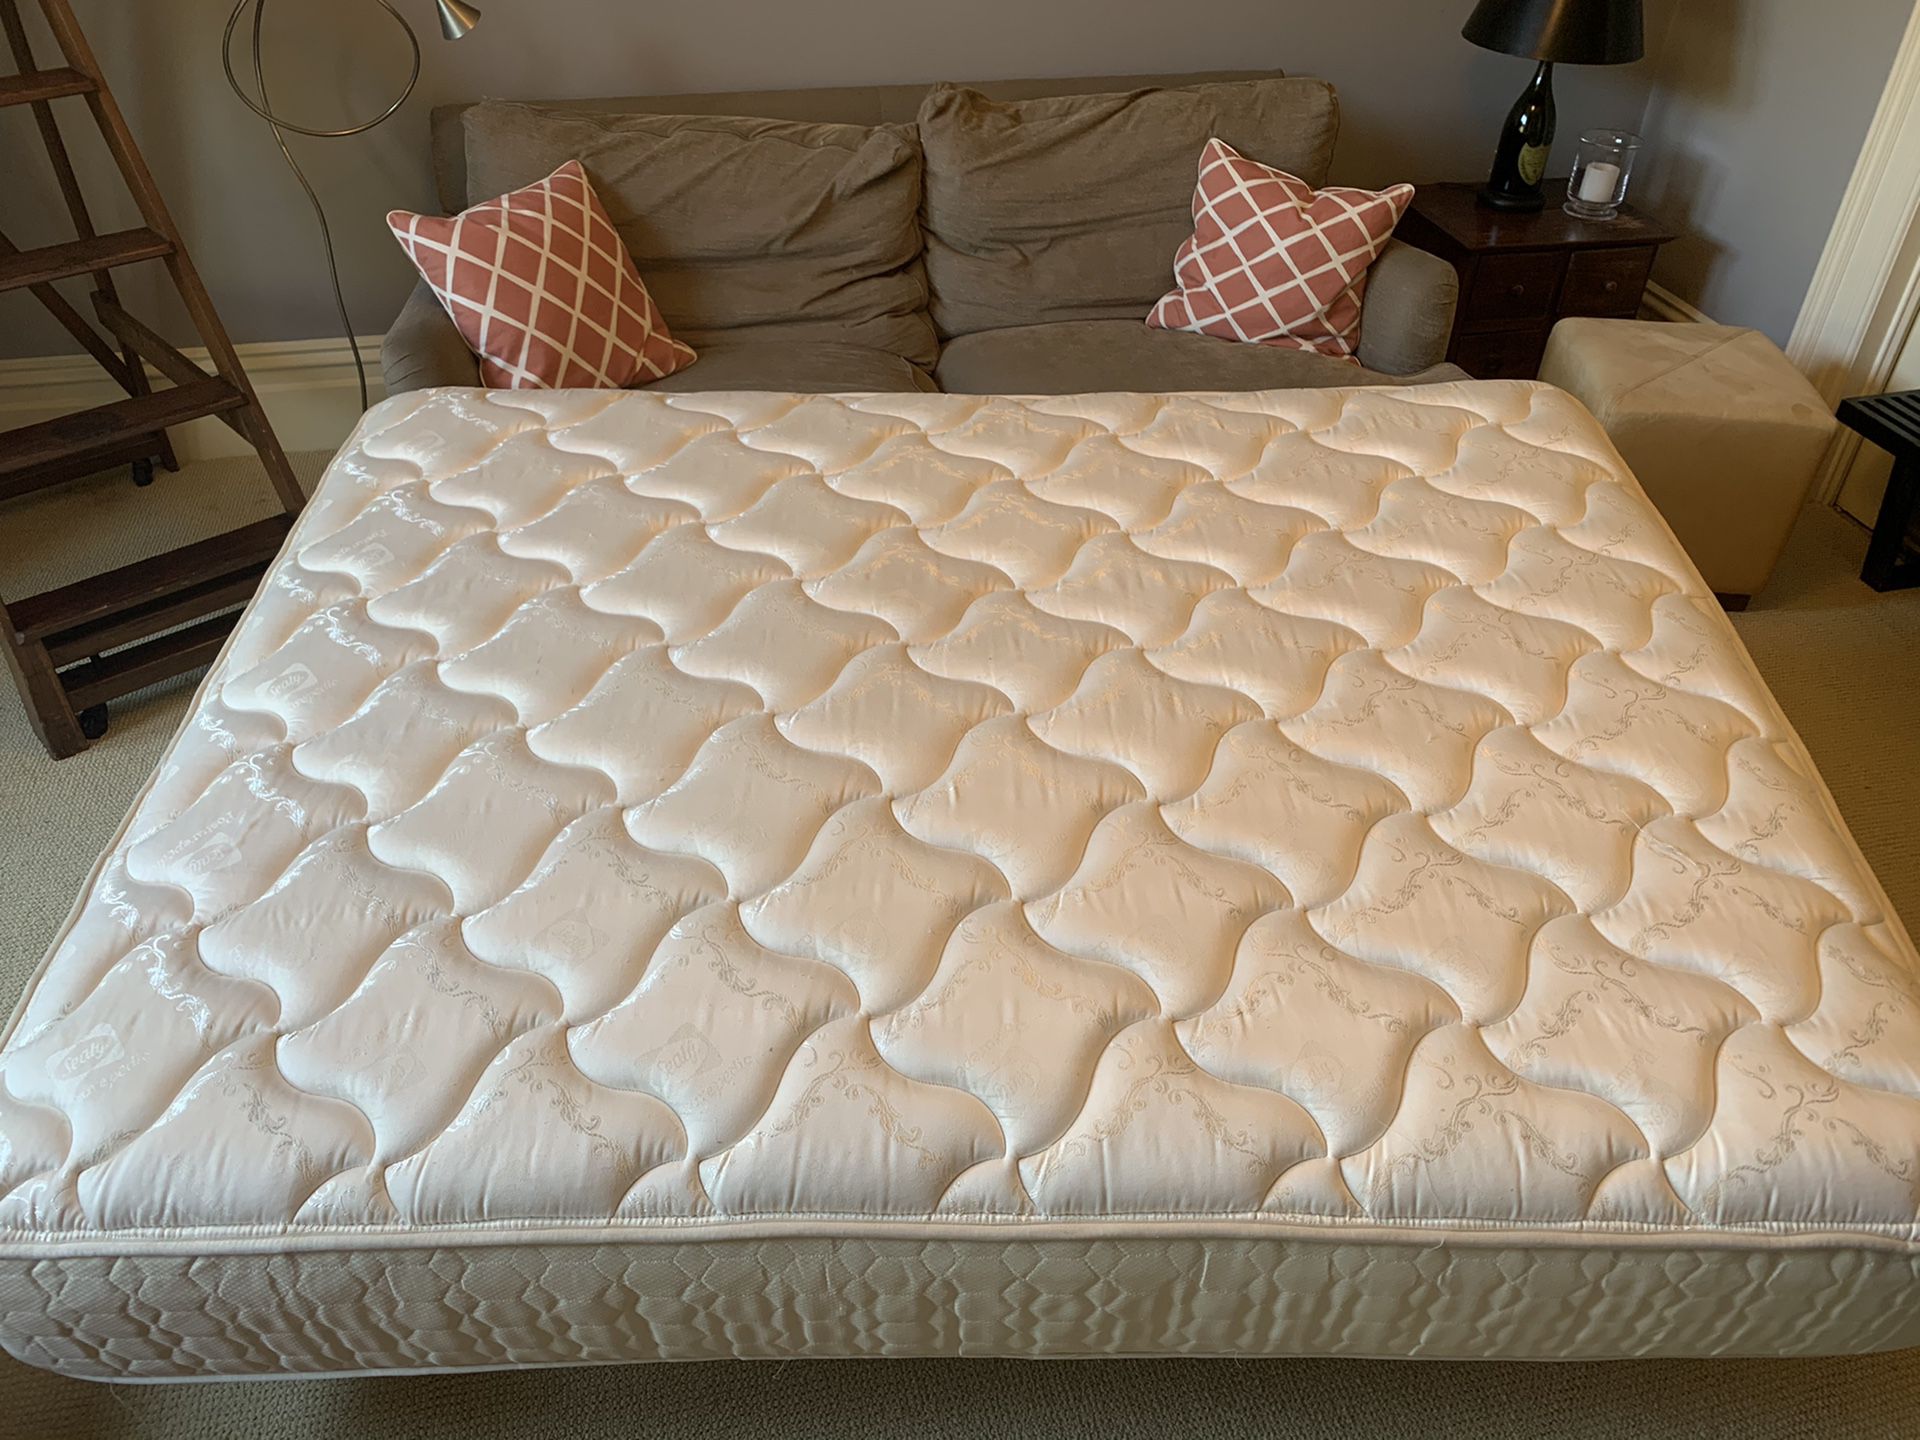 Free Queen size mattress- Sealy Posturepedic Plush